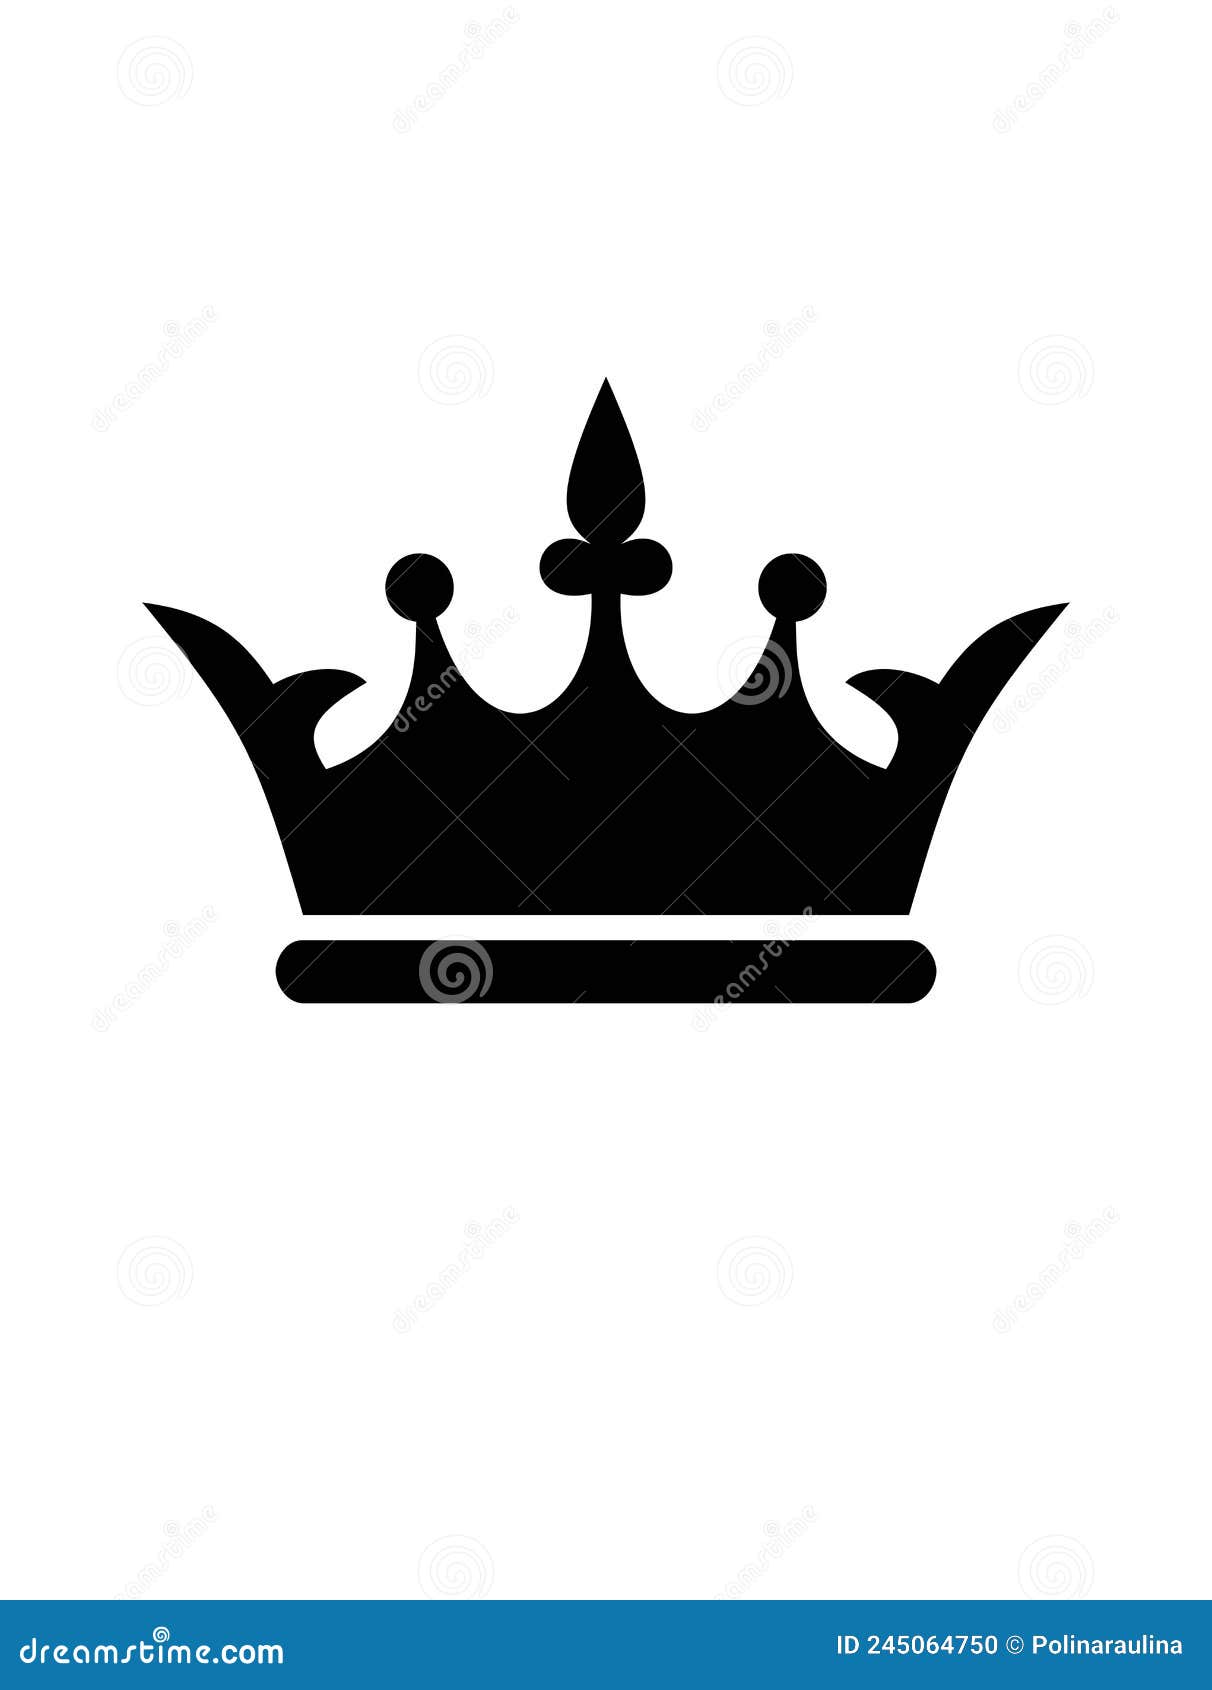 Queen King Prince Princess Crown Silhouette Icon Sign Stock Vector -  Illustration of corona, designq: 245064750